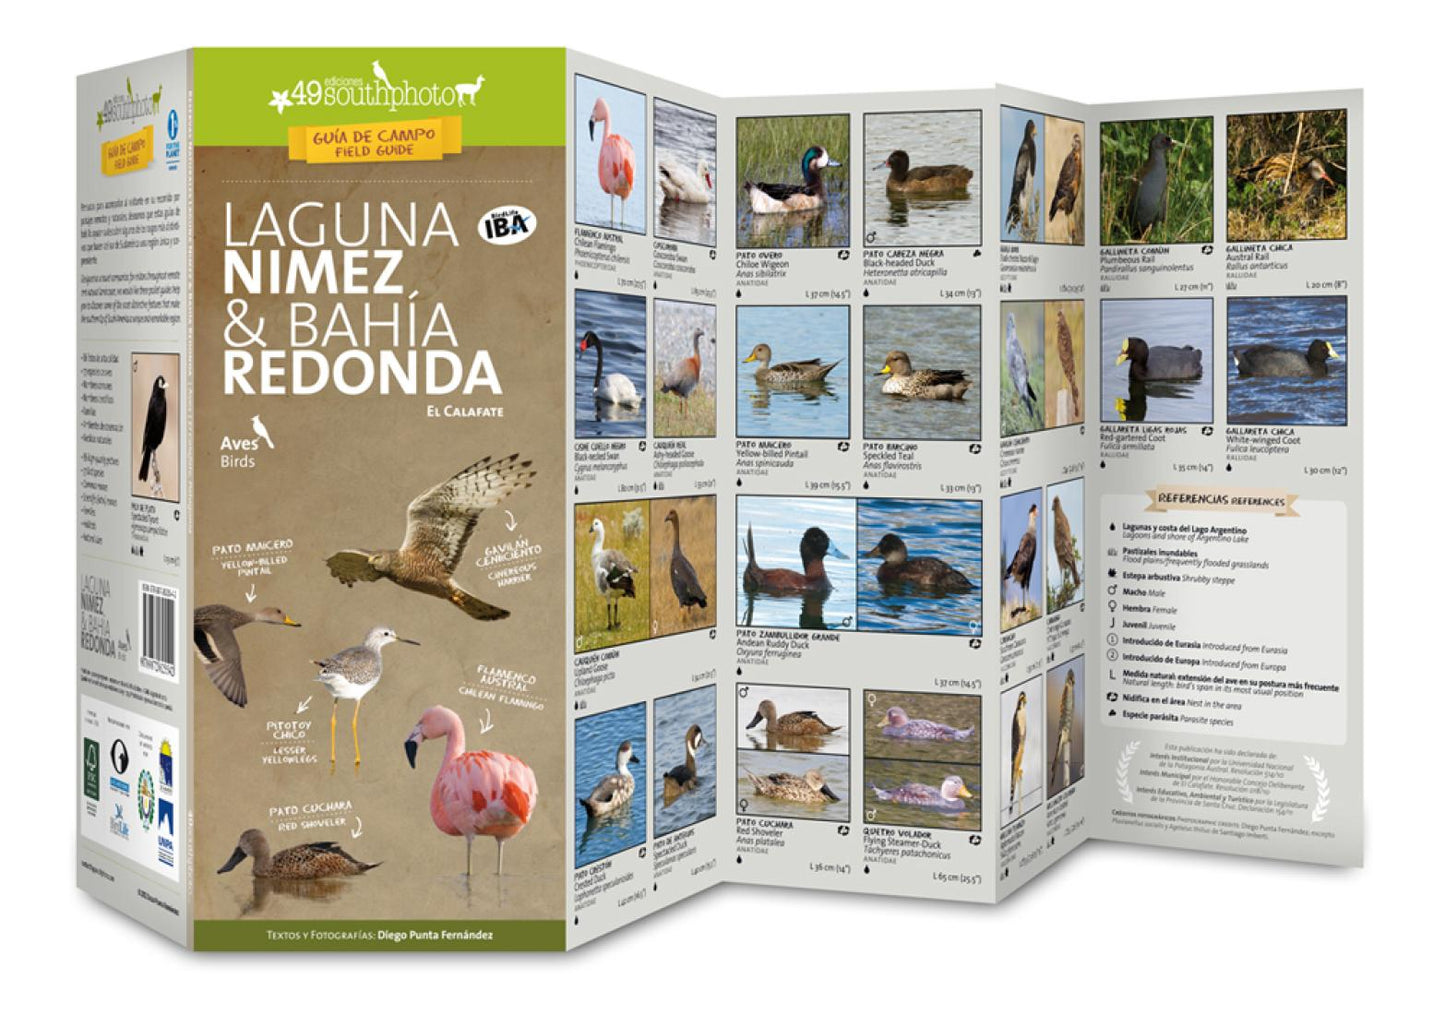 Laguna Nimez & Bahia Redonda (El Calafate). : Birds